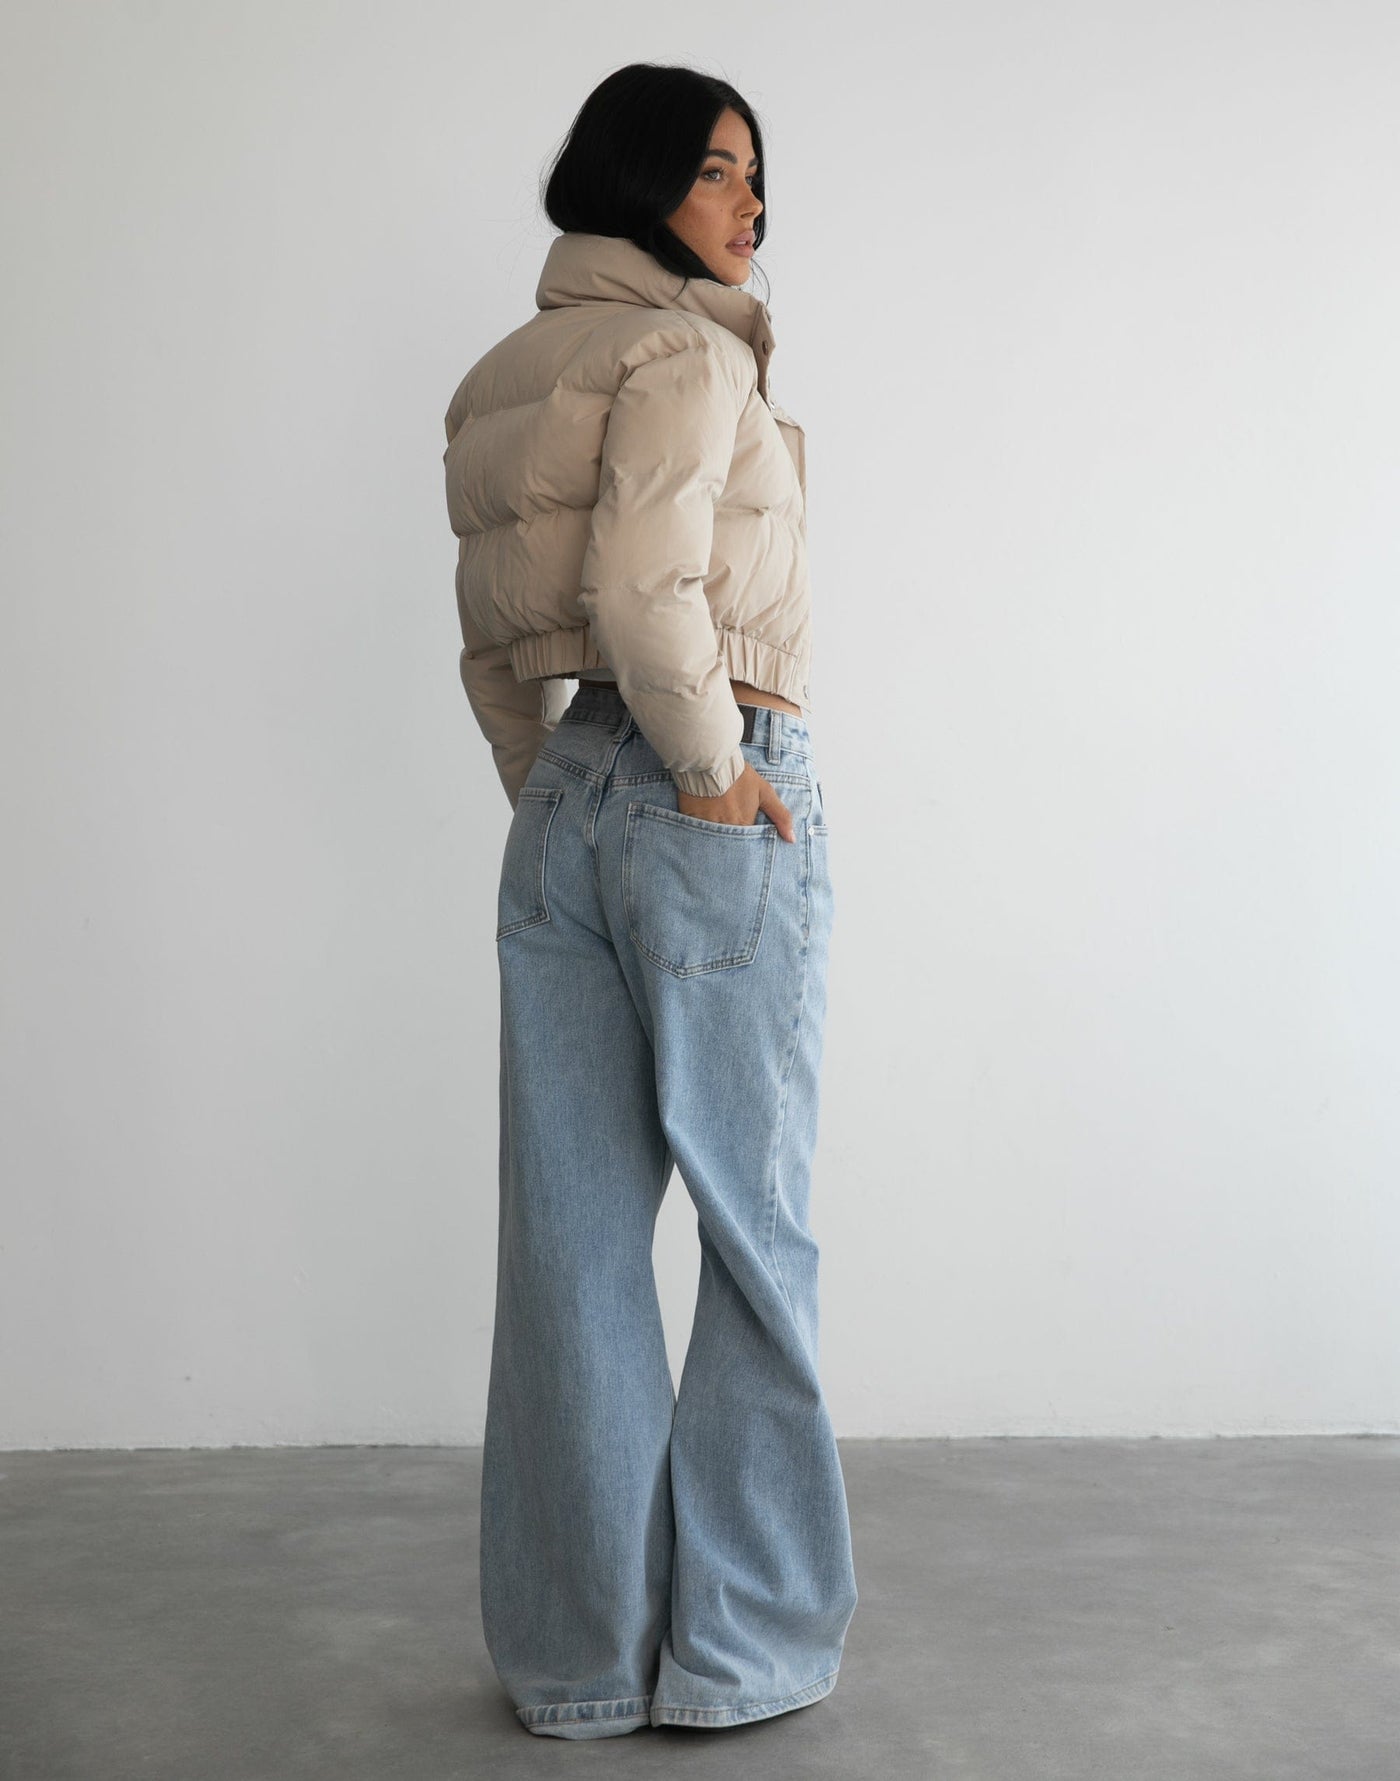 Robbie Puffer Jacket (Beige) - Beige Puffer Jacket - Women's Outerwear - Charcoal Clothing